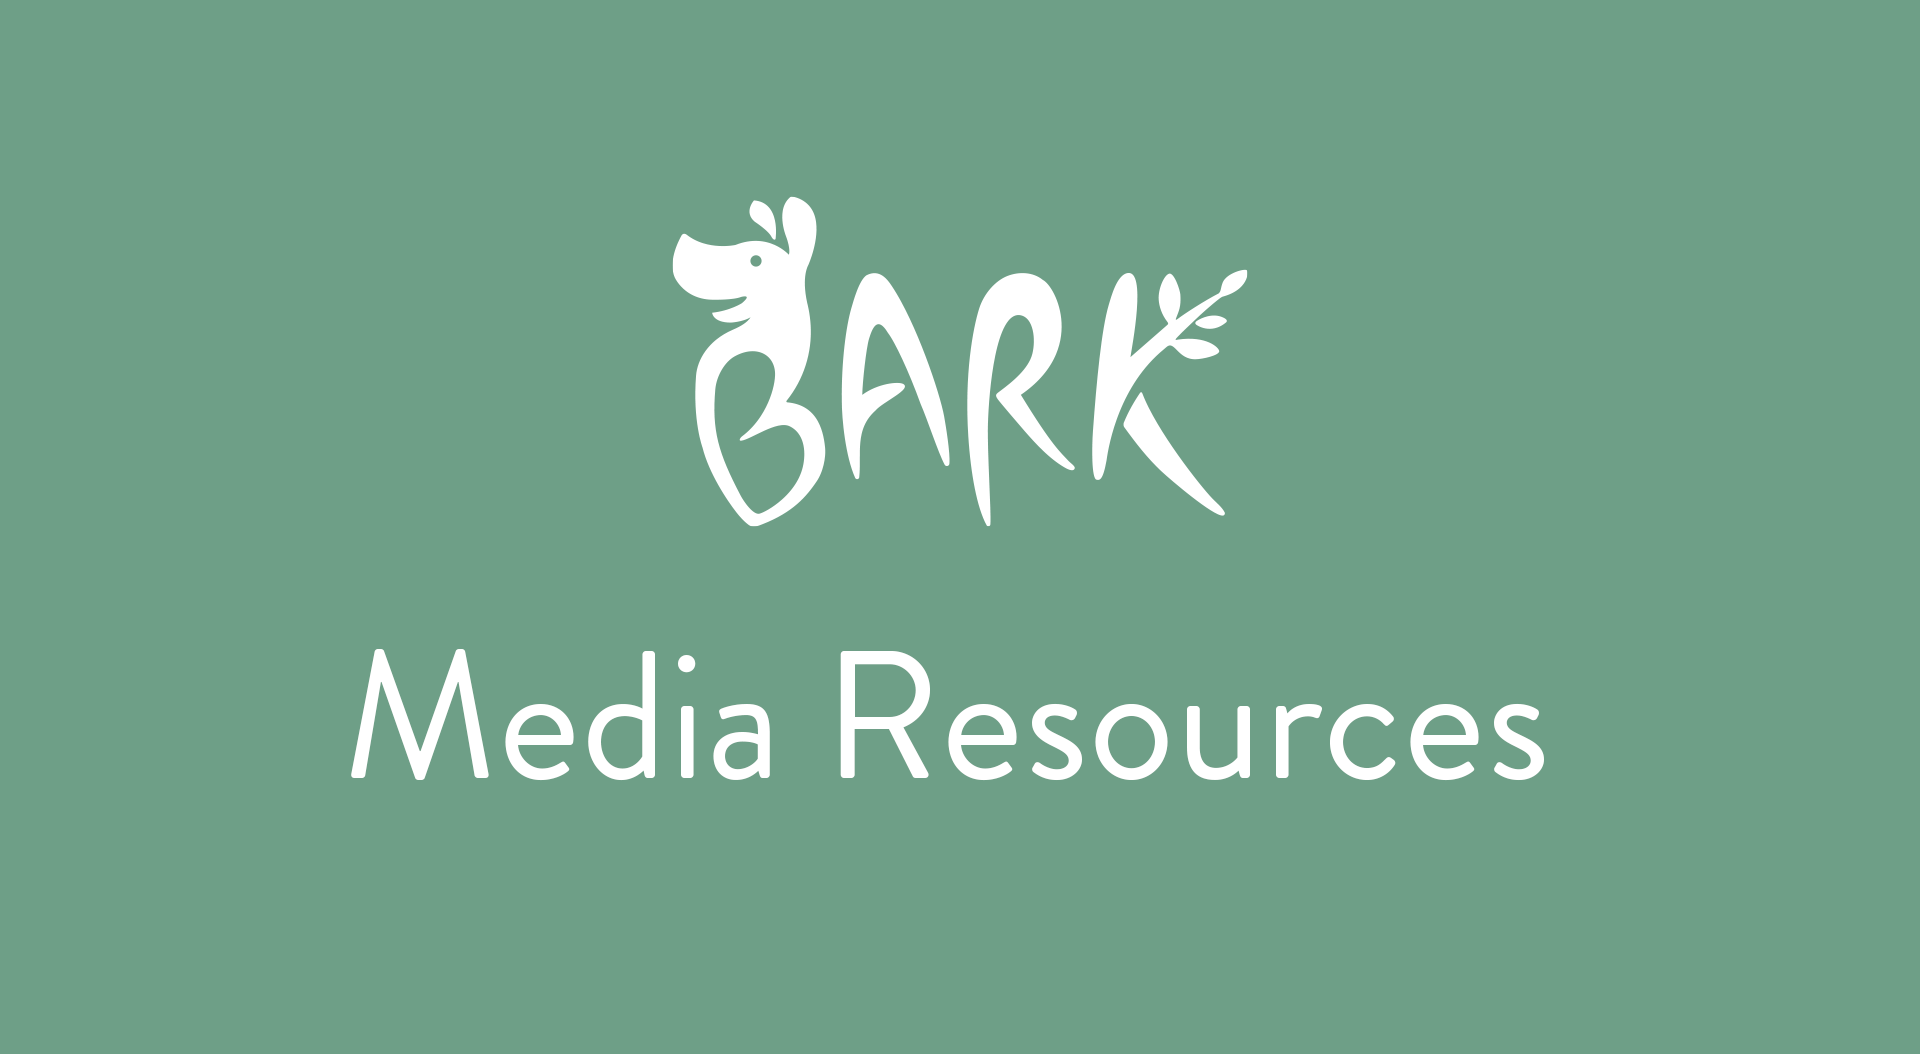 BARK Media Resources